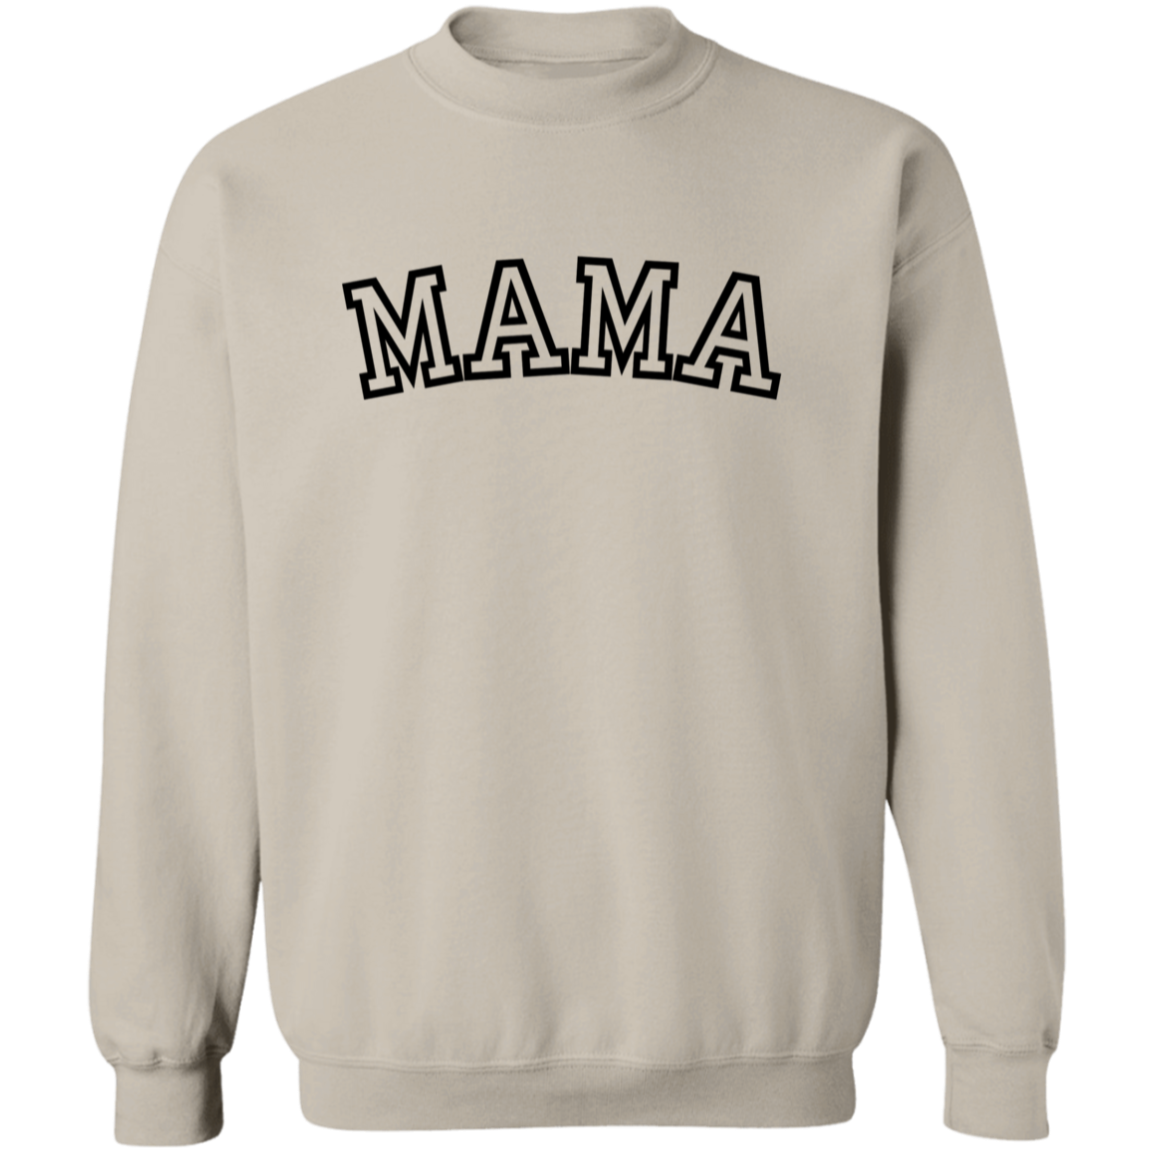 MAMA Sweatshirt | Perfect Gift to Celebrate Mother's Day | Perfect Mother's Day Gift | Perfect Birthday Gift | Just Because Gift | Celebrate Mom